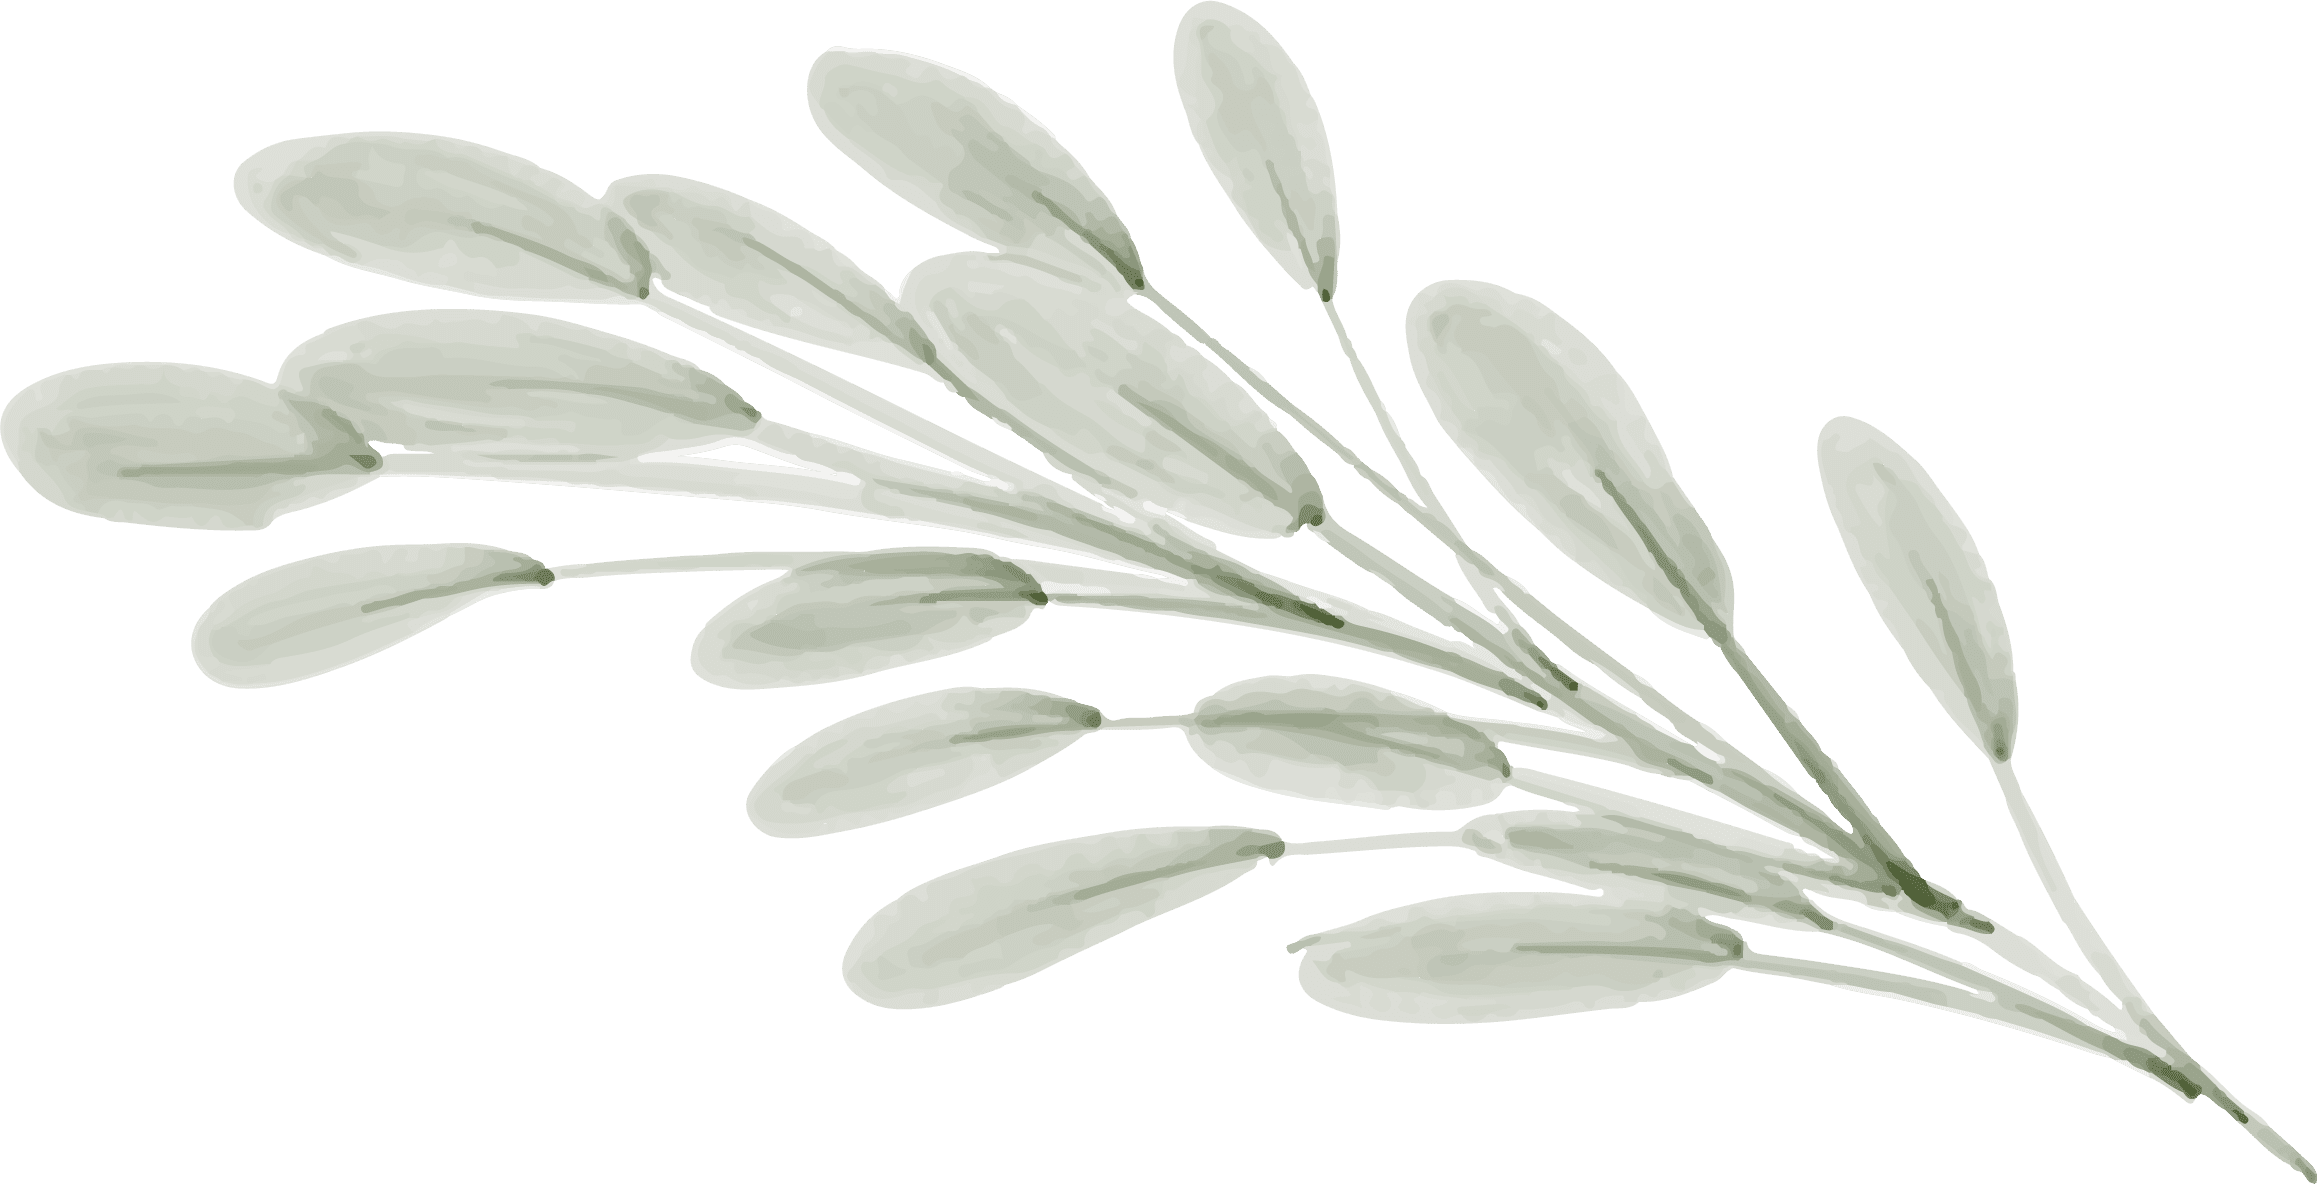 Organic leaf design